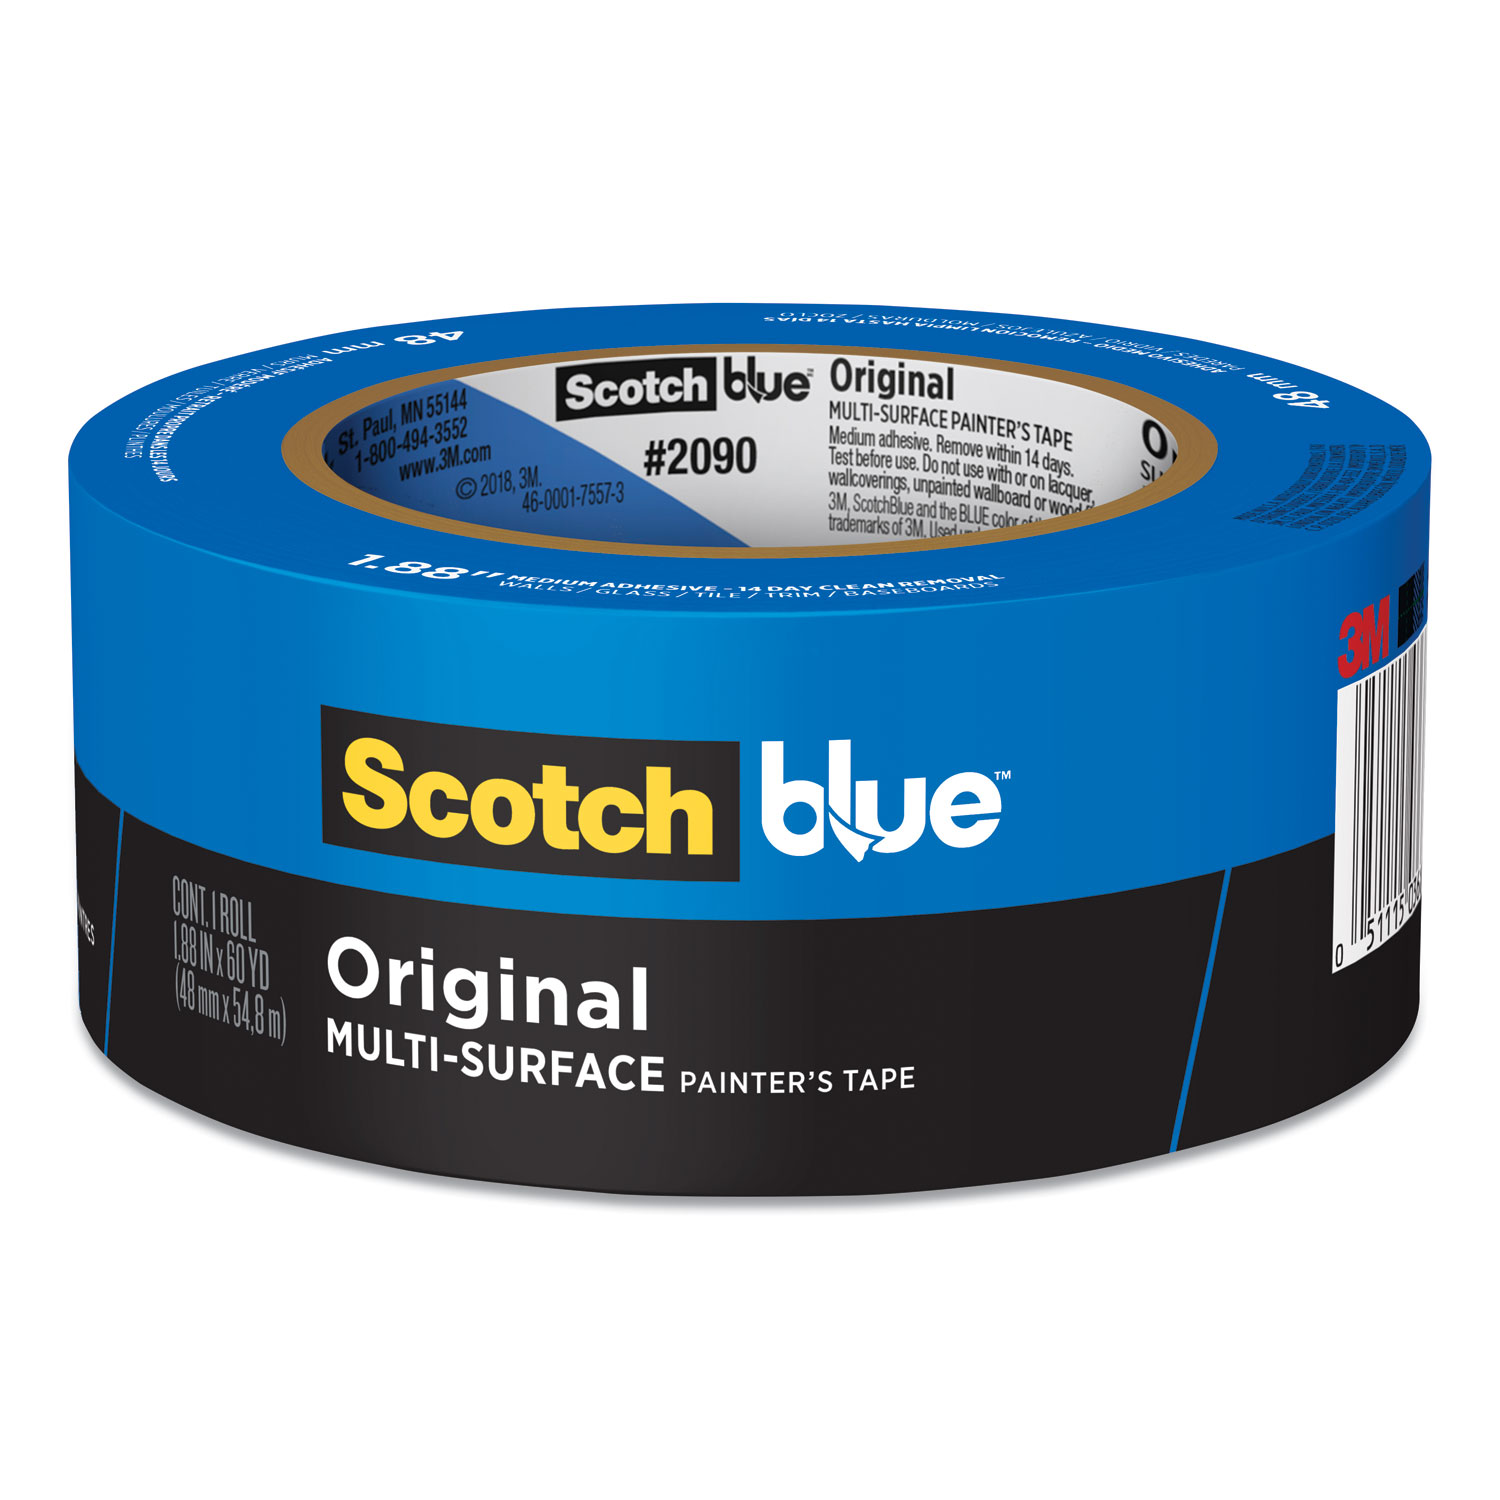  ScotchBlue 70006960218 Original Multi-Surface Painter's Tape, 2 x 60 yds, Blue (MMM5111503683) 